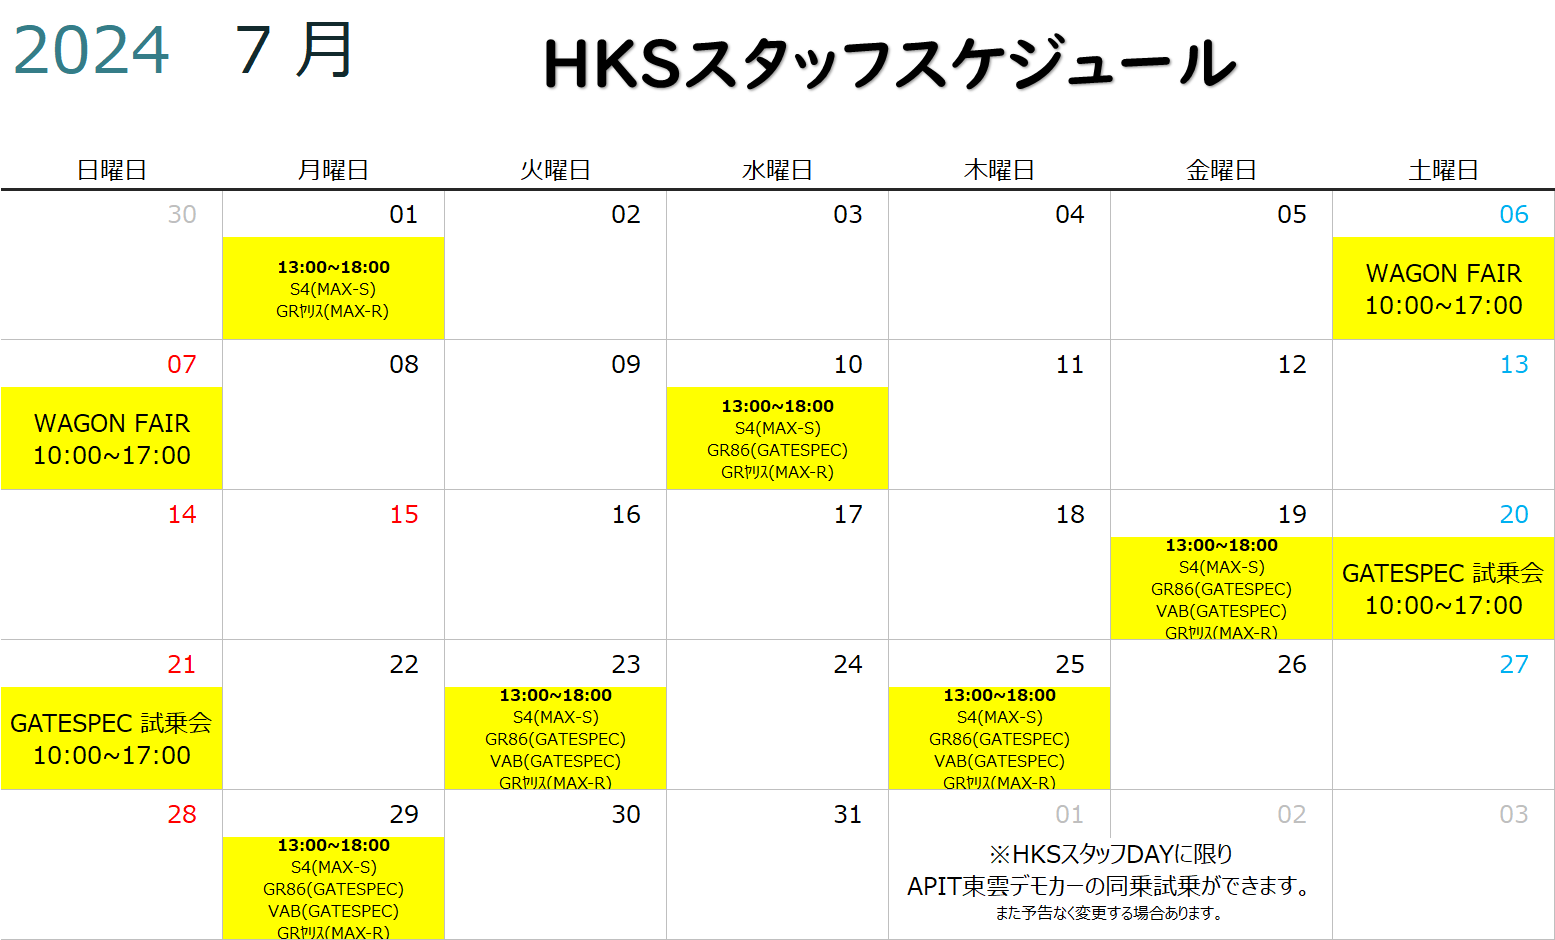 【HKS GATE】 7月度HKSスタッフスケジュール